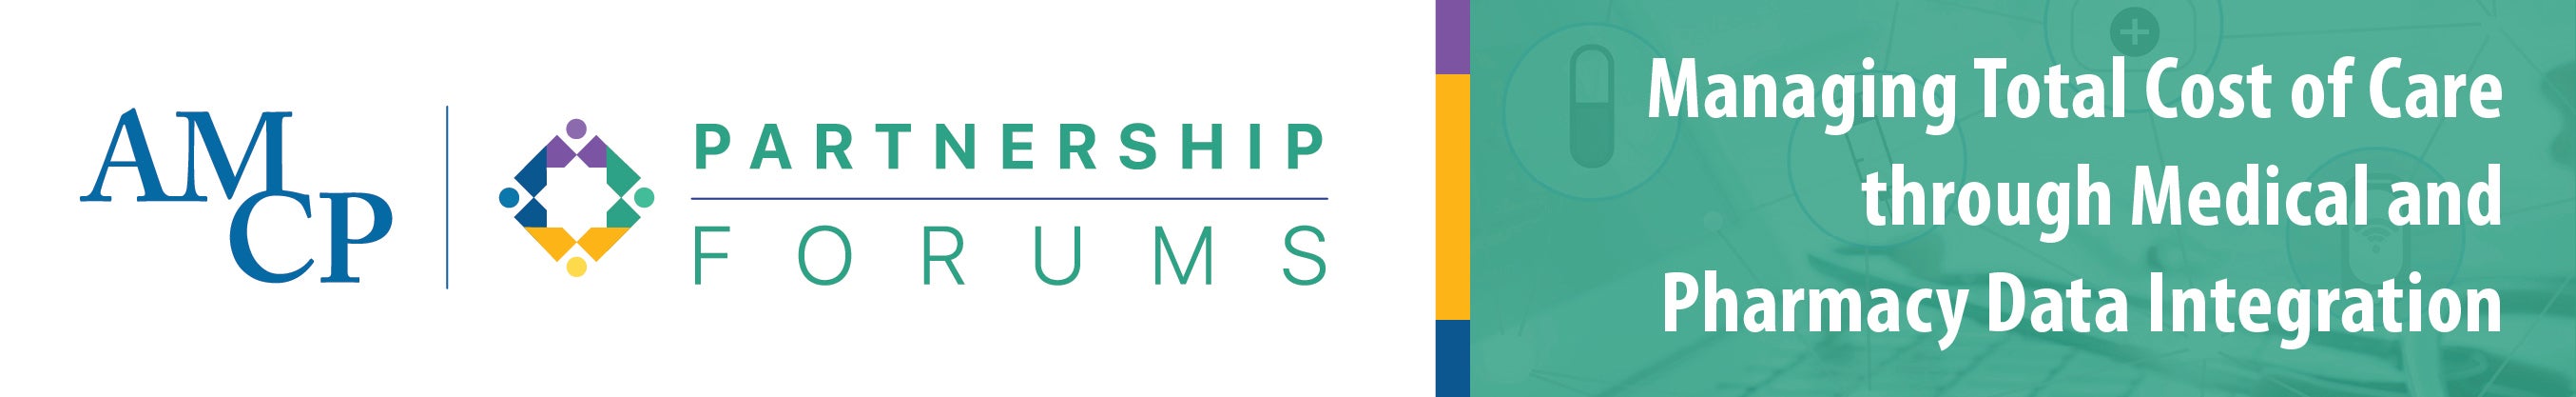 Partnership Forum Banner Image